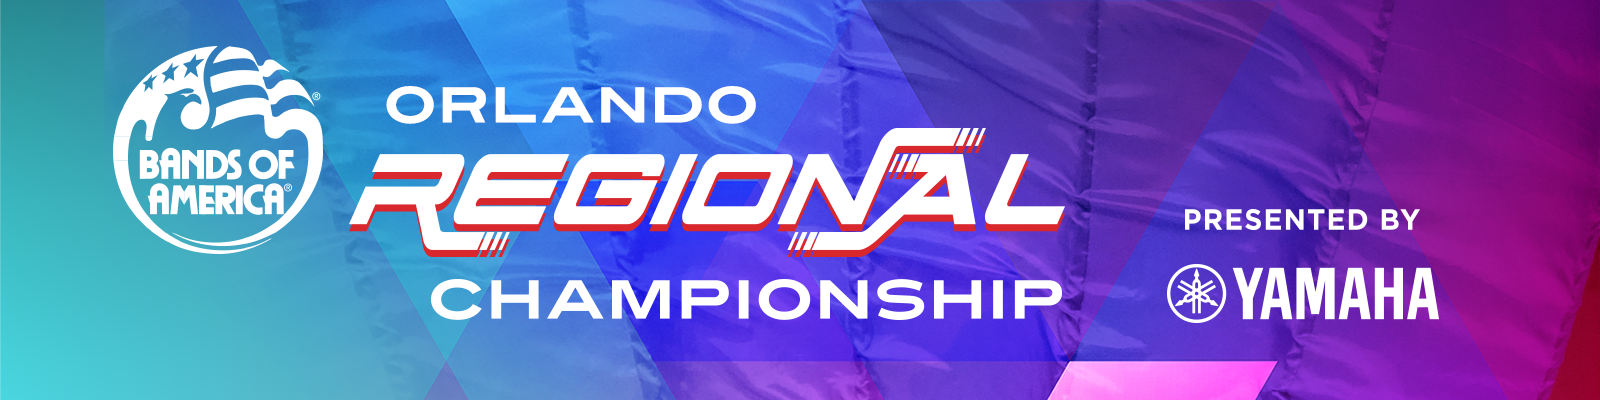 Bands of America Orlando Regional Championship Presented by Yamaha